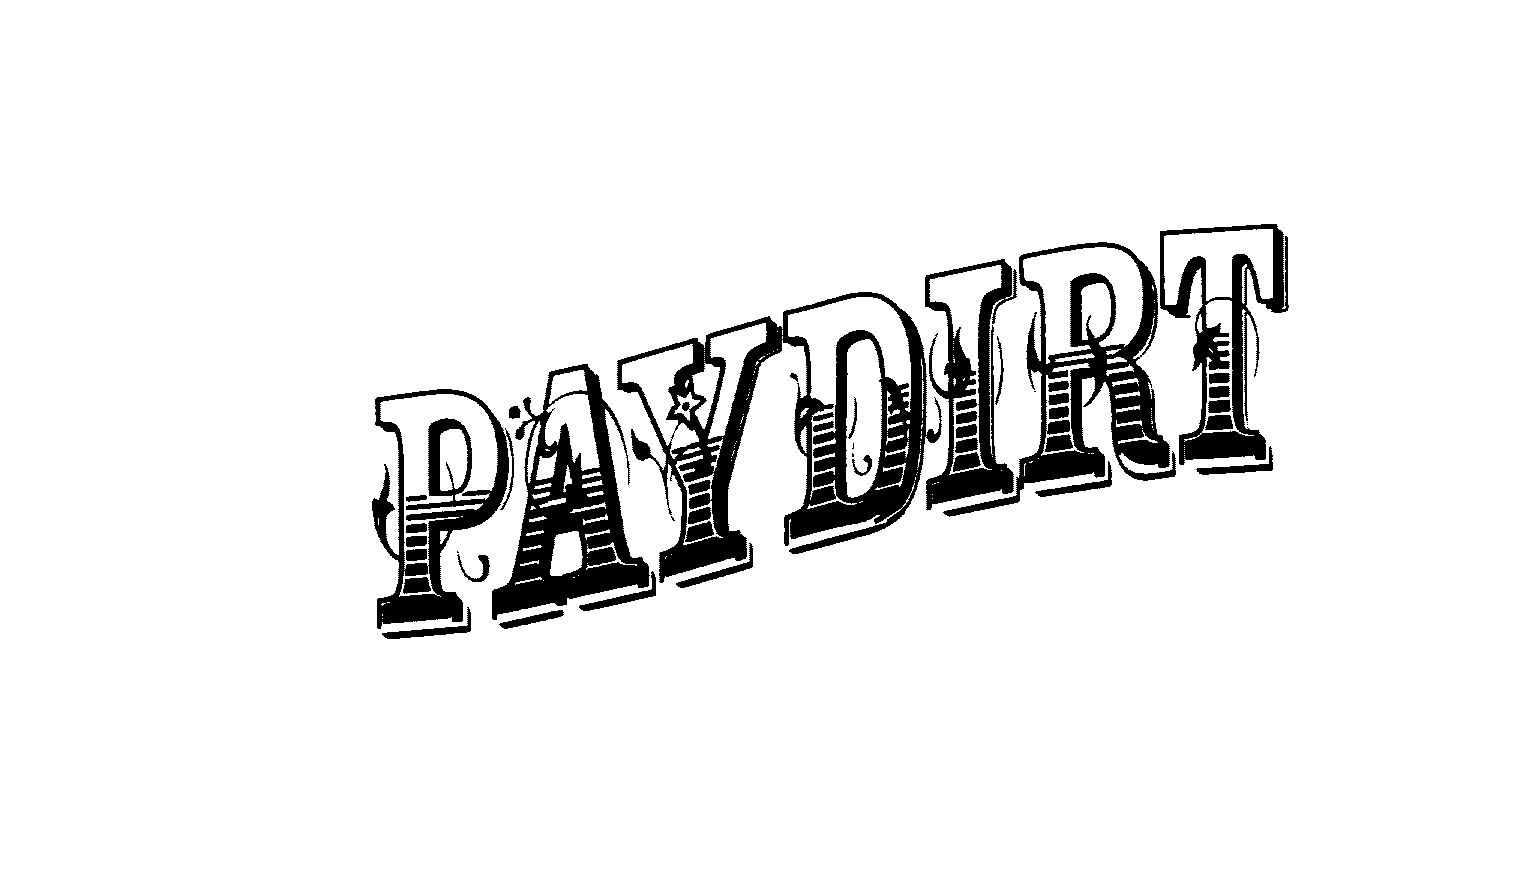 Trademark Logo PAYDIRT